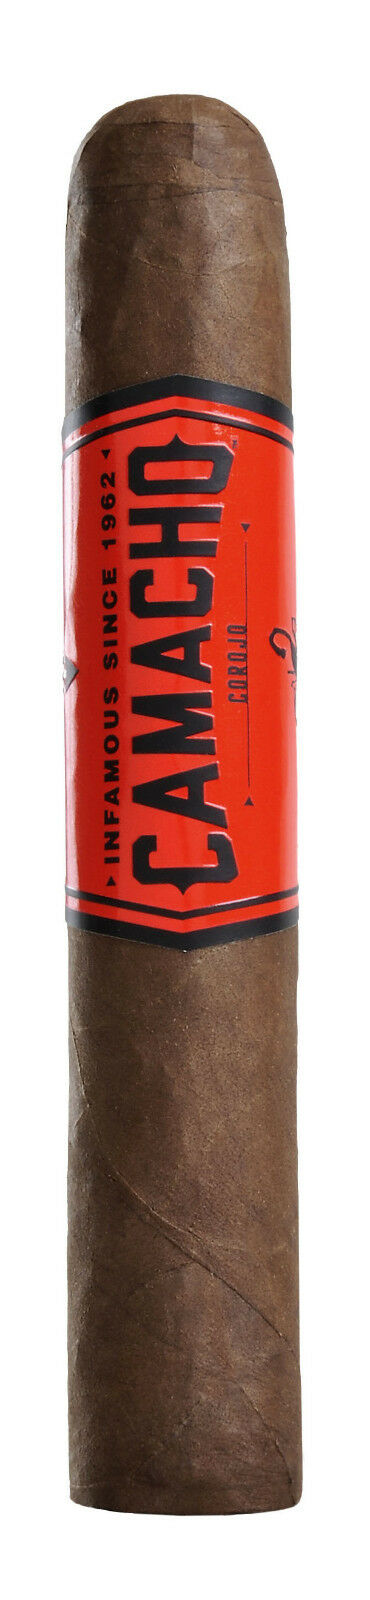 Camacho - Corojo  –  4 Zigarren im ROBUSTO-Format - Longfiller aus Honduras